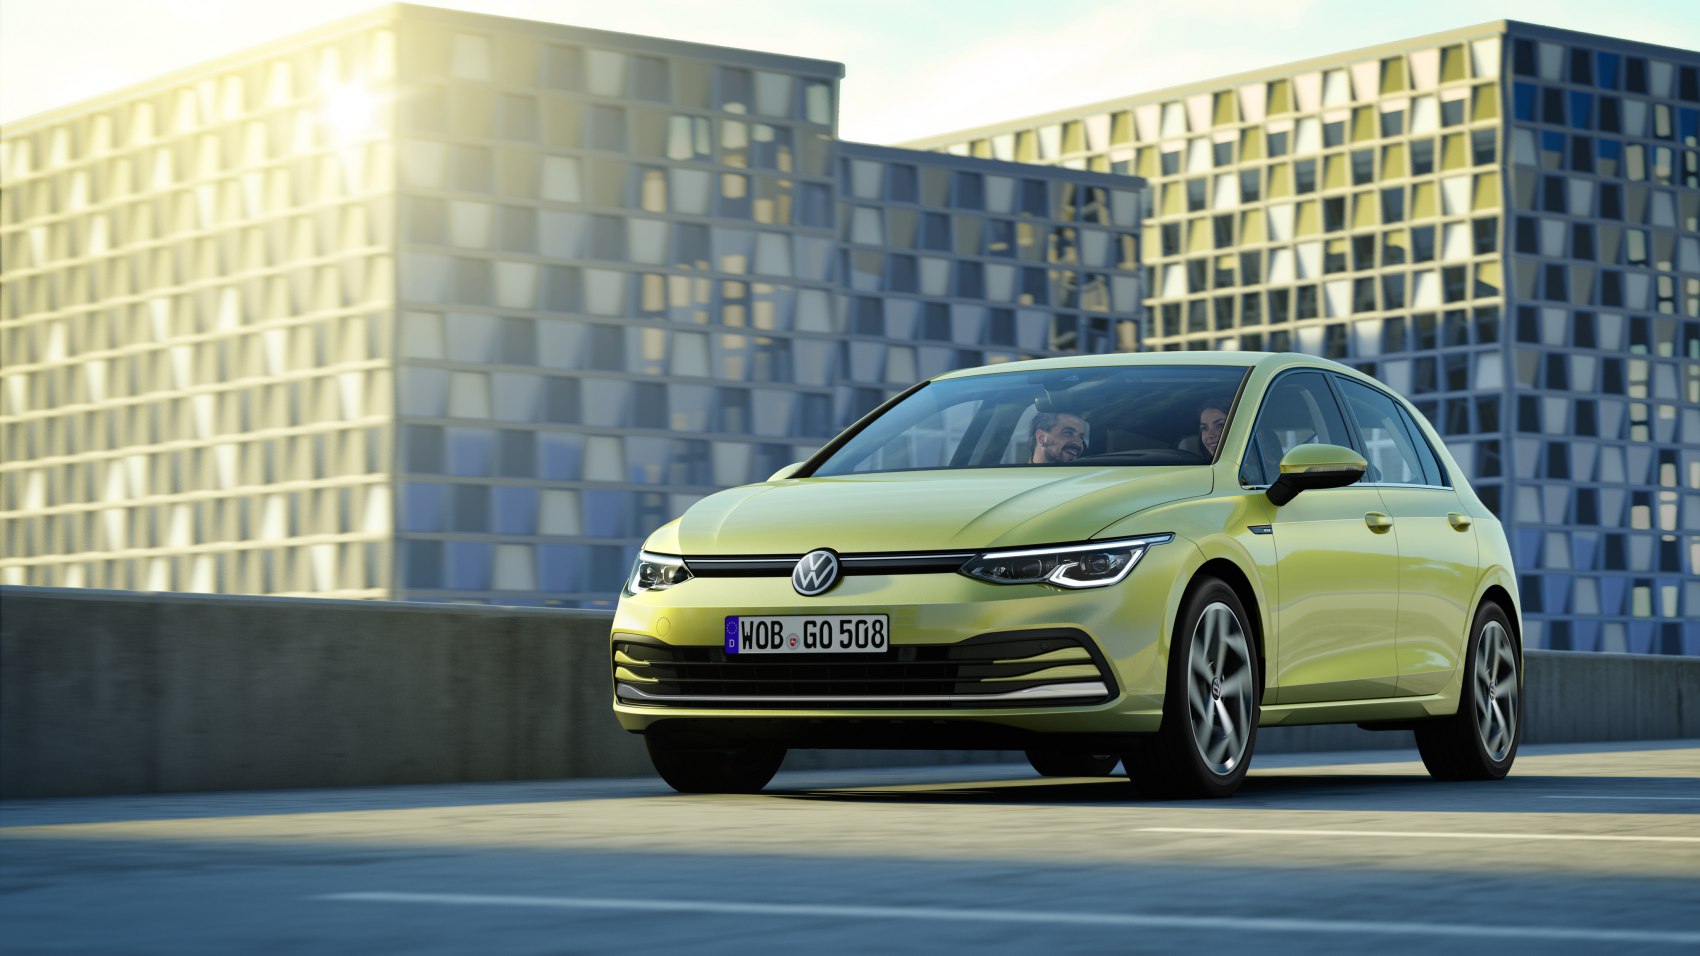 Kinderdag Koninklijke familie vasteland 2020 Volkswagen Golf VIII 2.0 TDI (115 Hp) | Technical specs, data, fuel  consumption, Dimensions